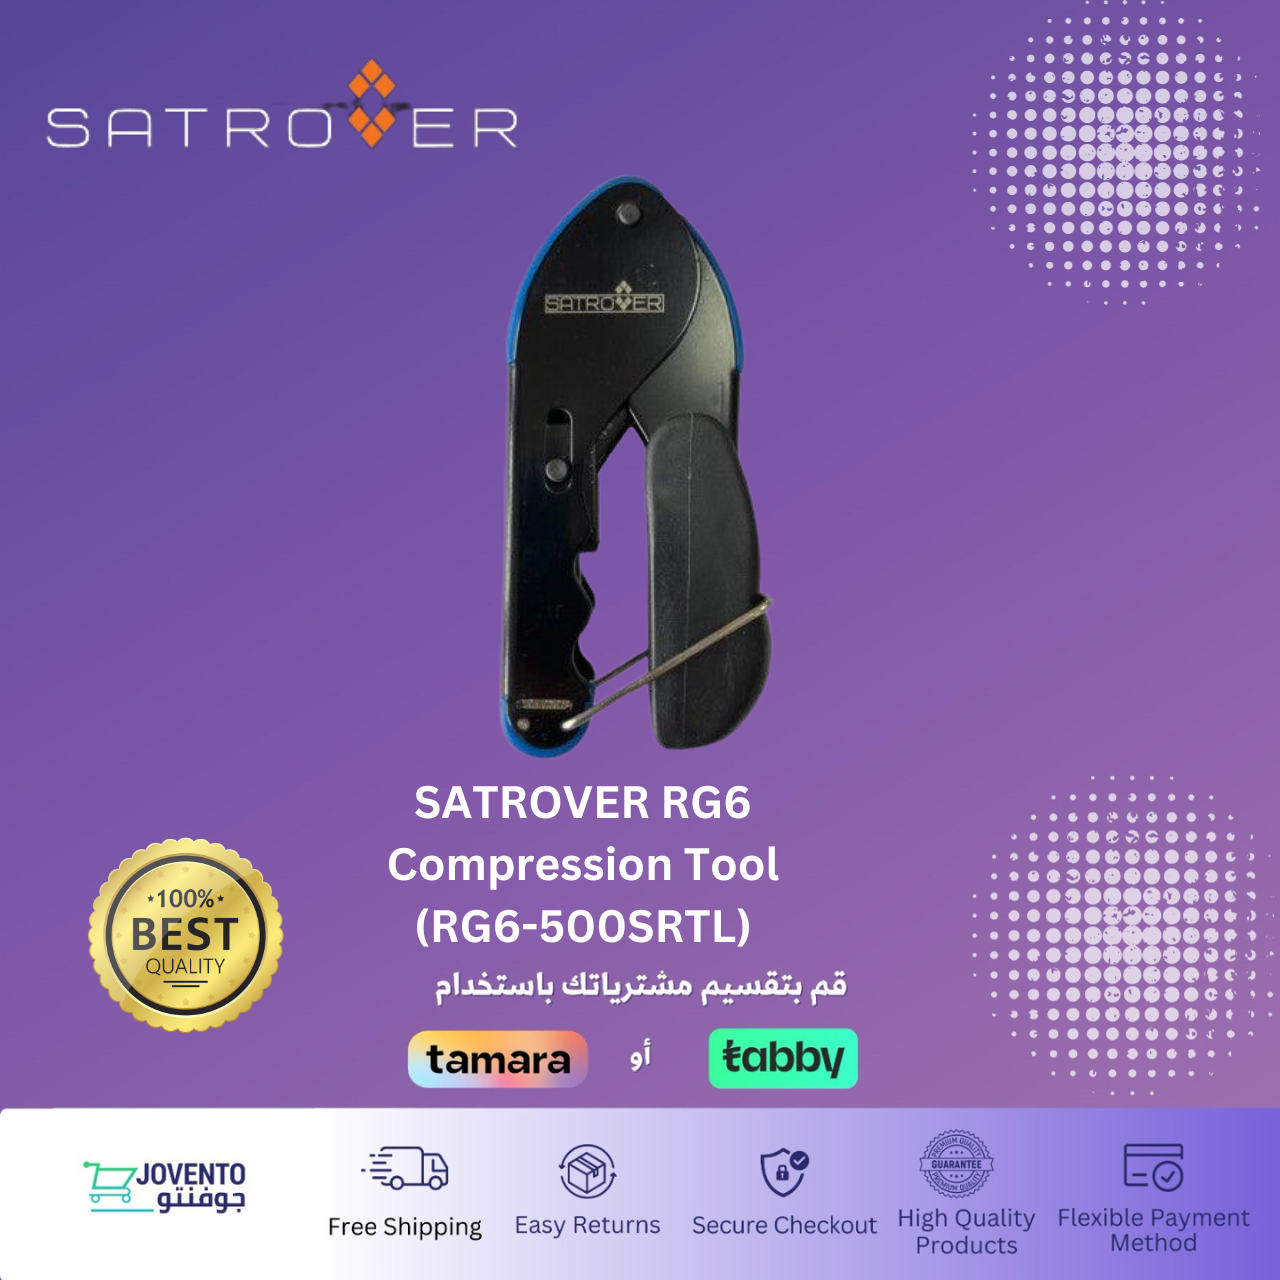 SATROVER RG6 Compression Tool (RG6-500SRTL)